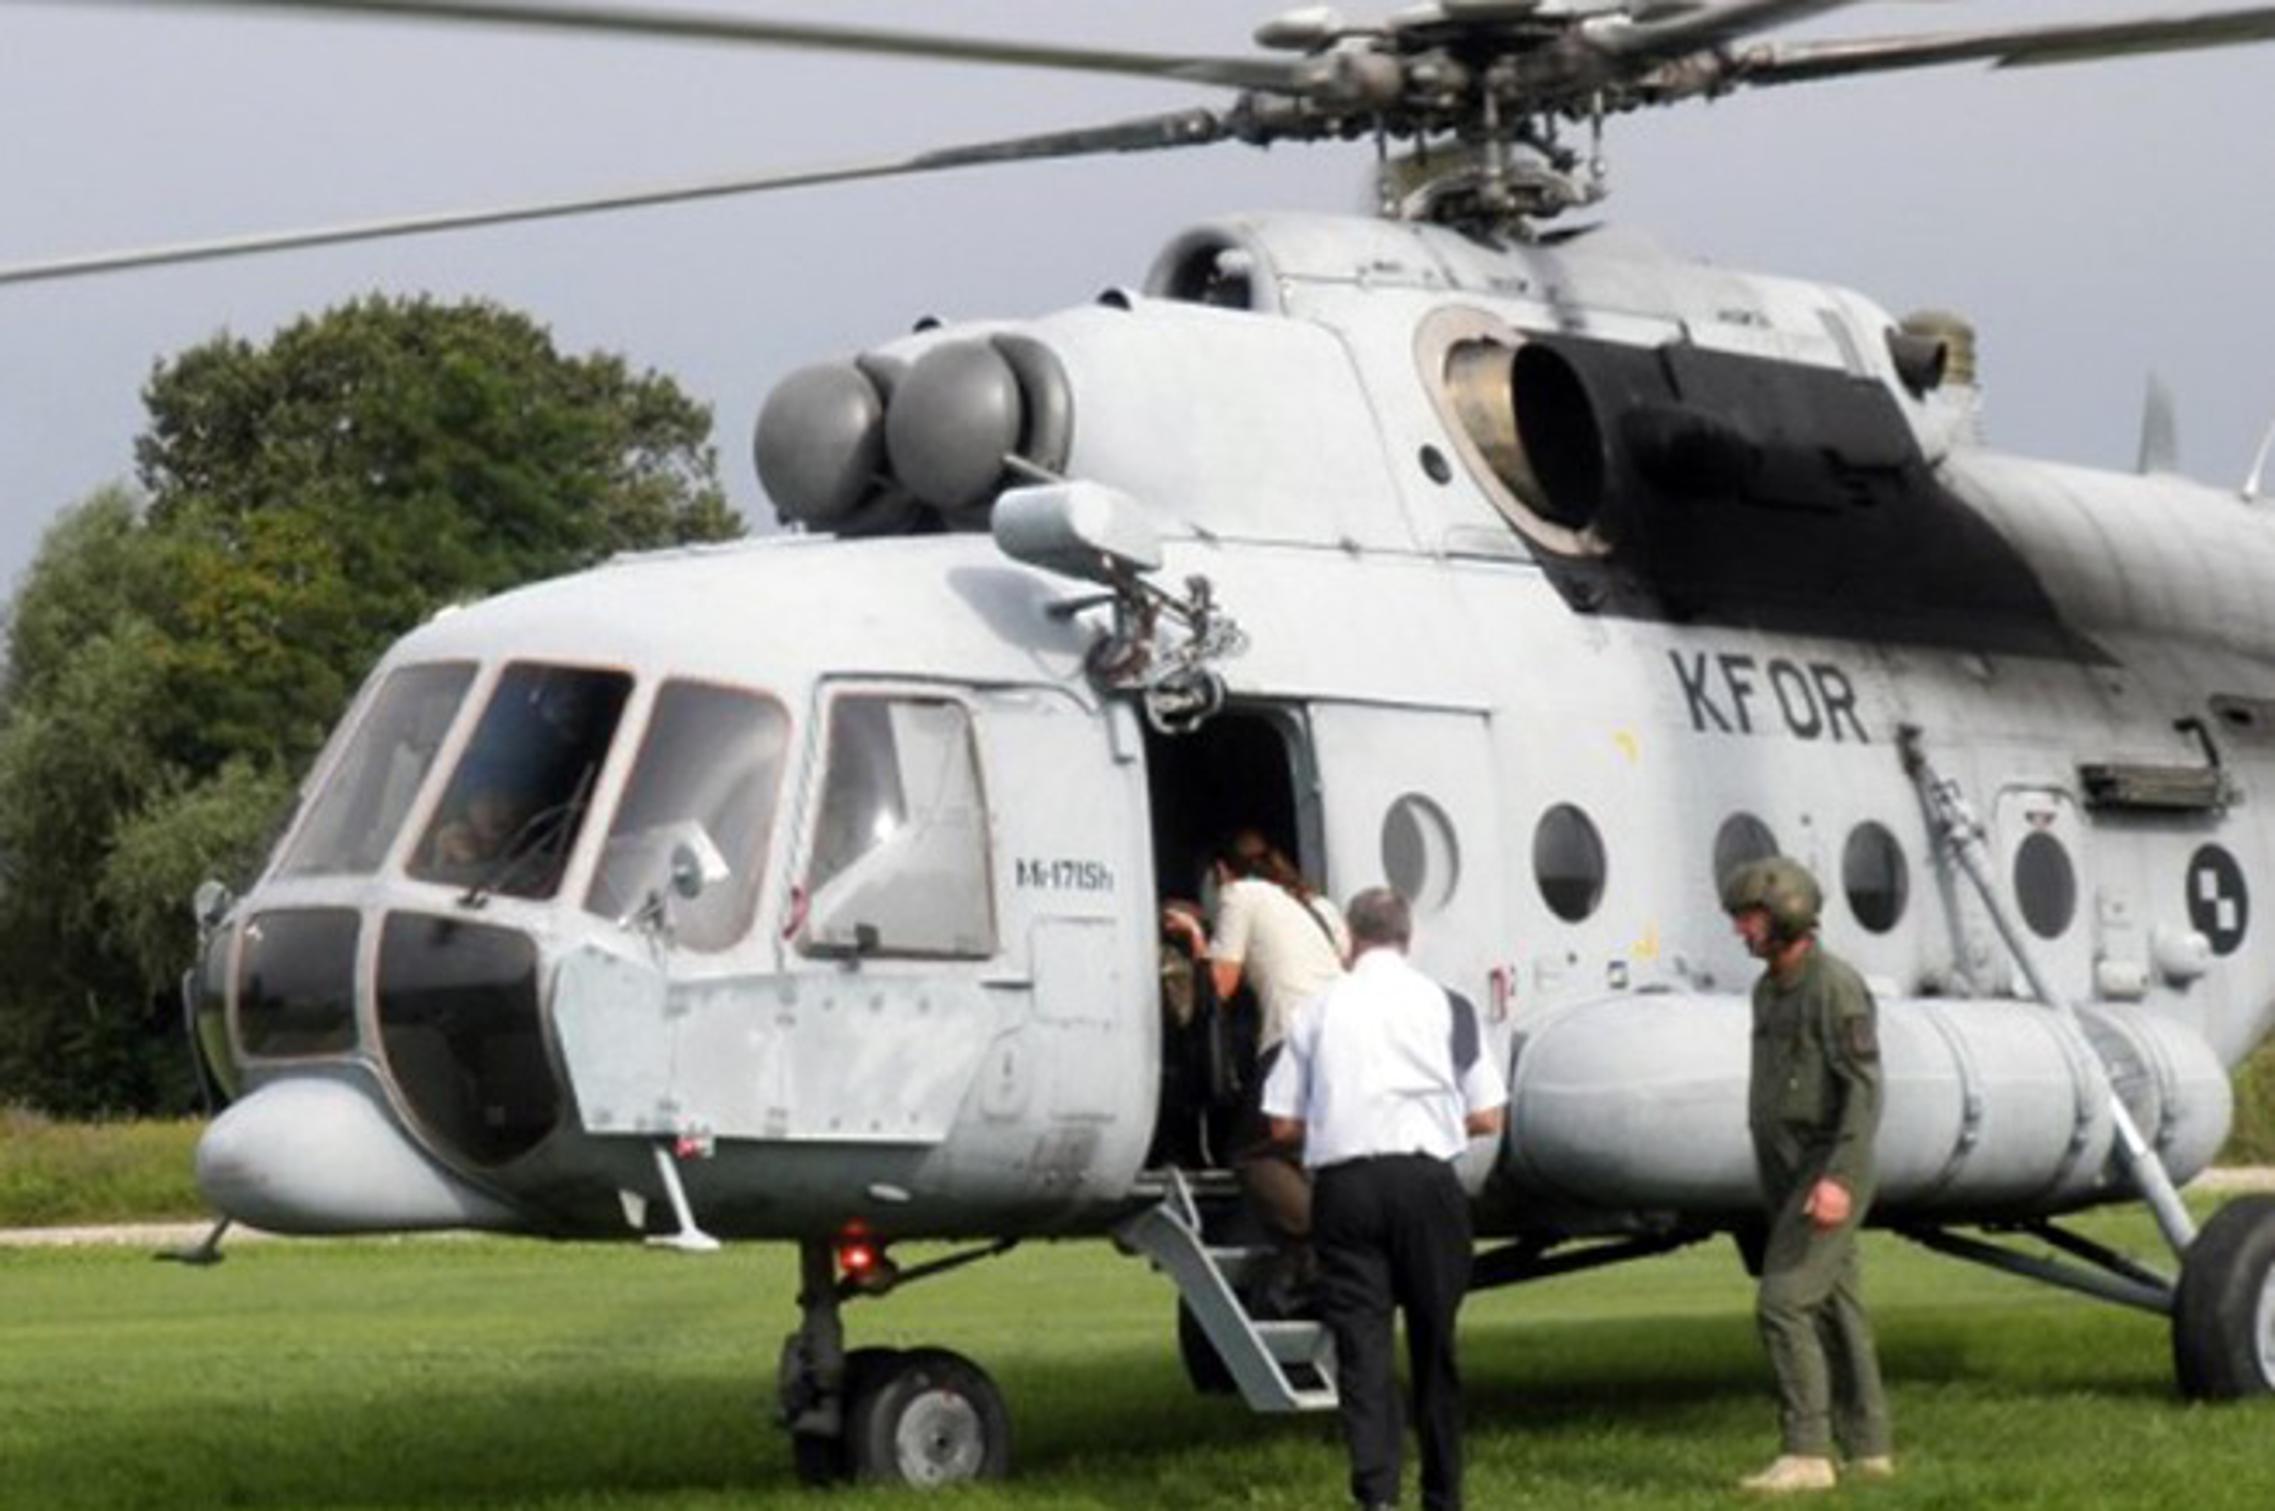 Ukrcavanje delegacije OS Republike Azerbajdžan  u helikopter HV na Marini Prelog